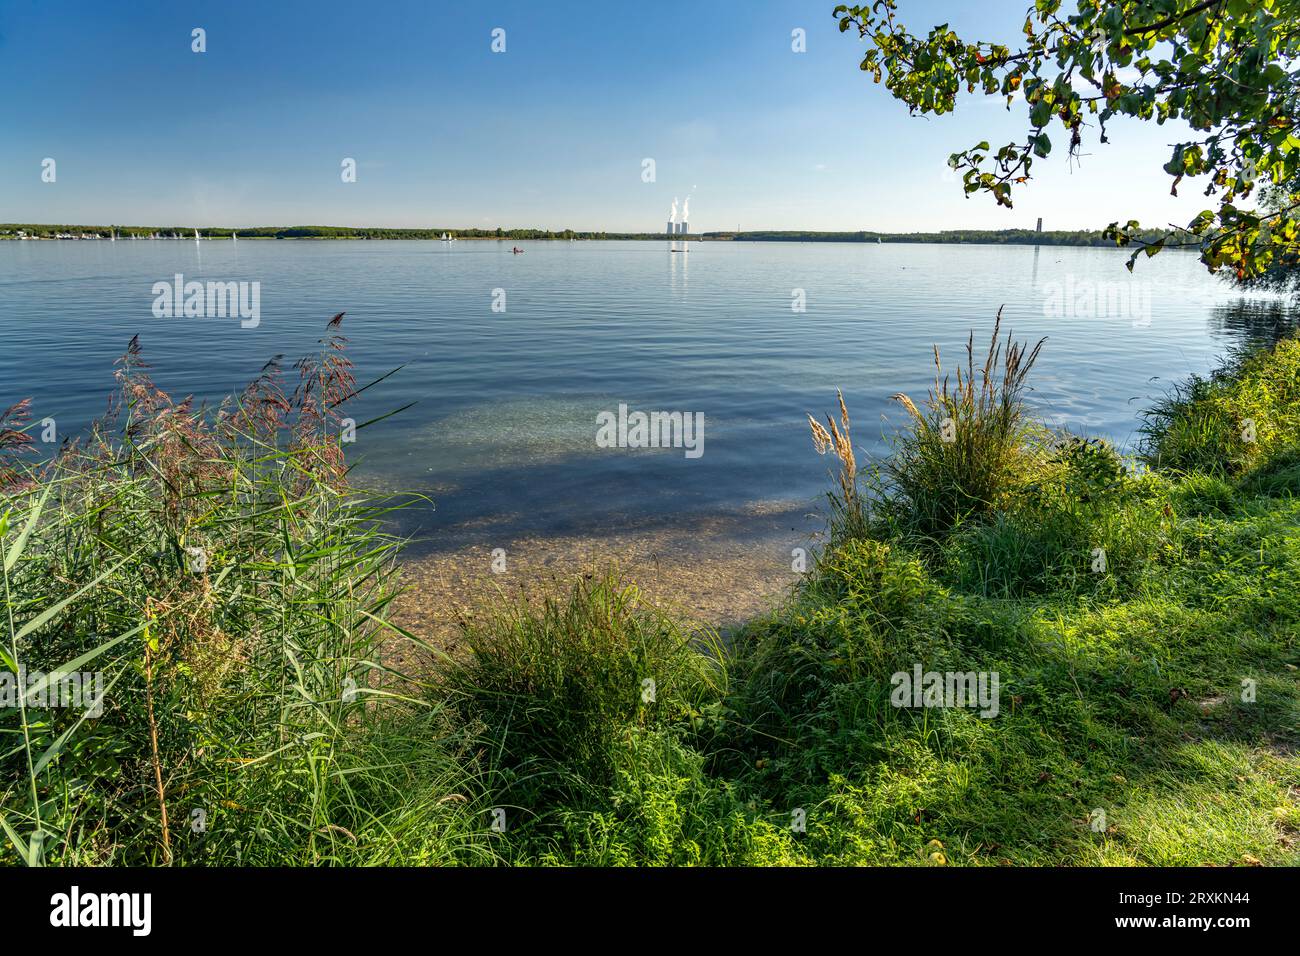 Der Cospudener See  bei  Leipzig, Sachsen, Deutschland |  Lake Cospuden Cospudener See near Leipzig, Saxony, Germany Stock Photo